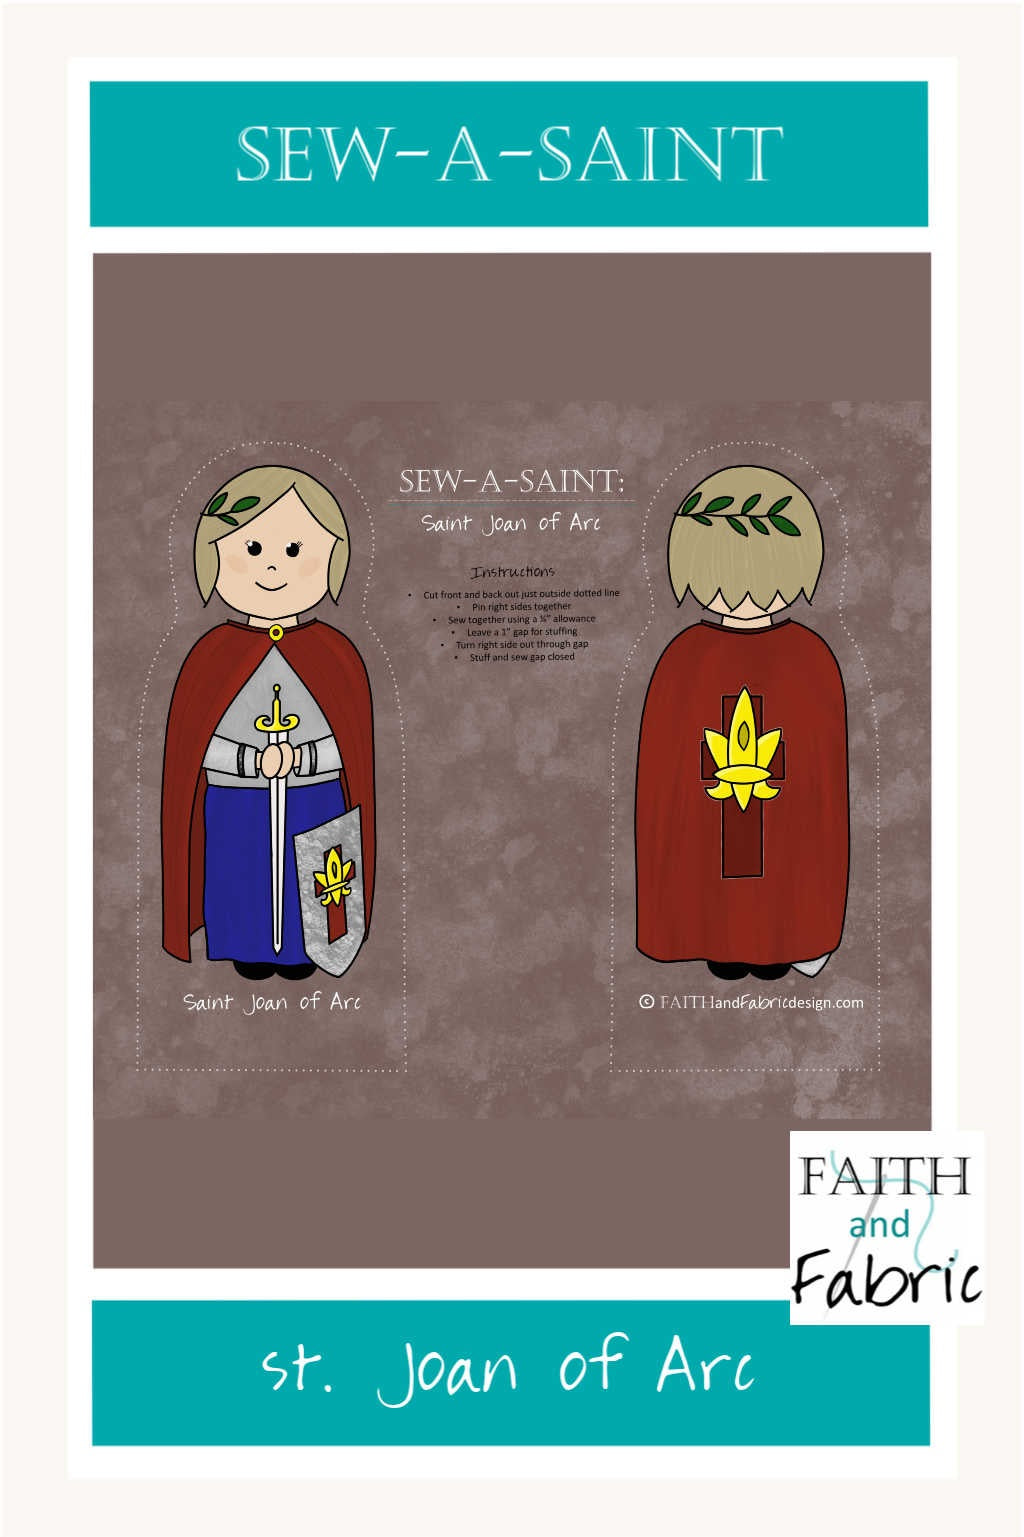 Sew-a-Saint: St. Joan of Arc (Fabric)